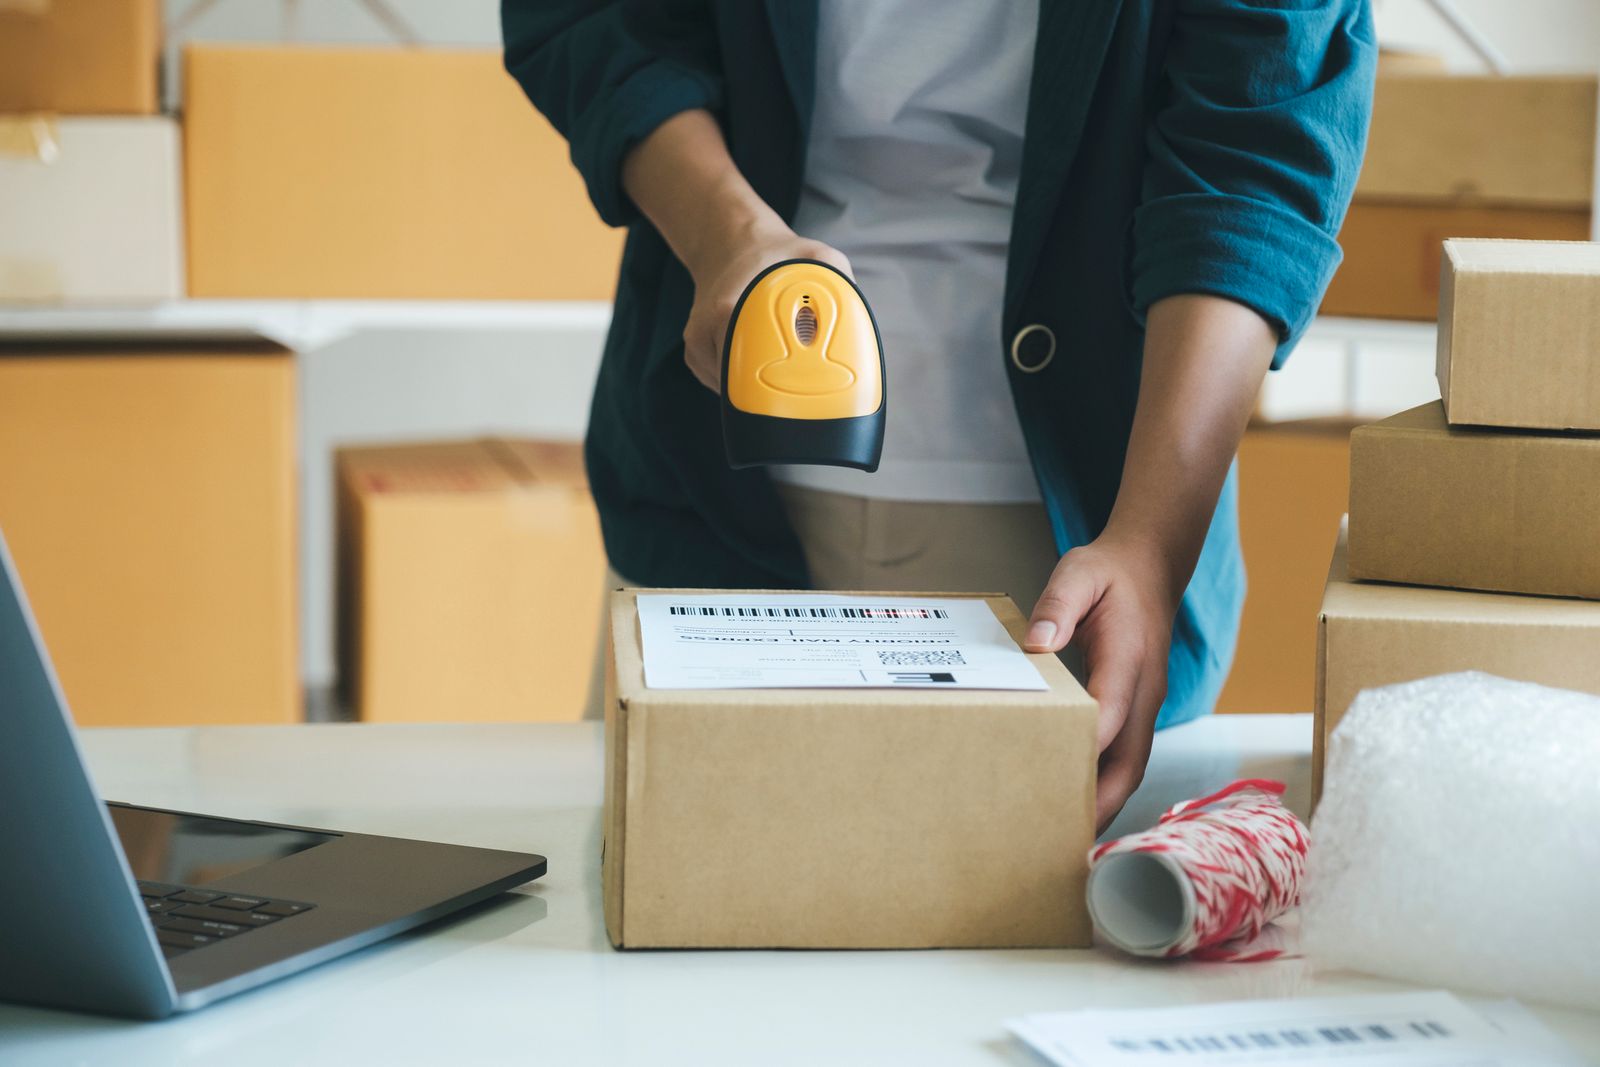 A young entrepreneur scanning online order boxes